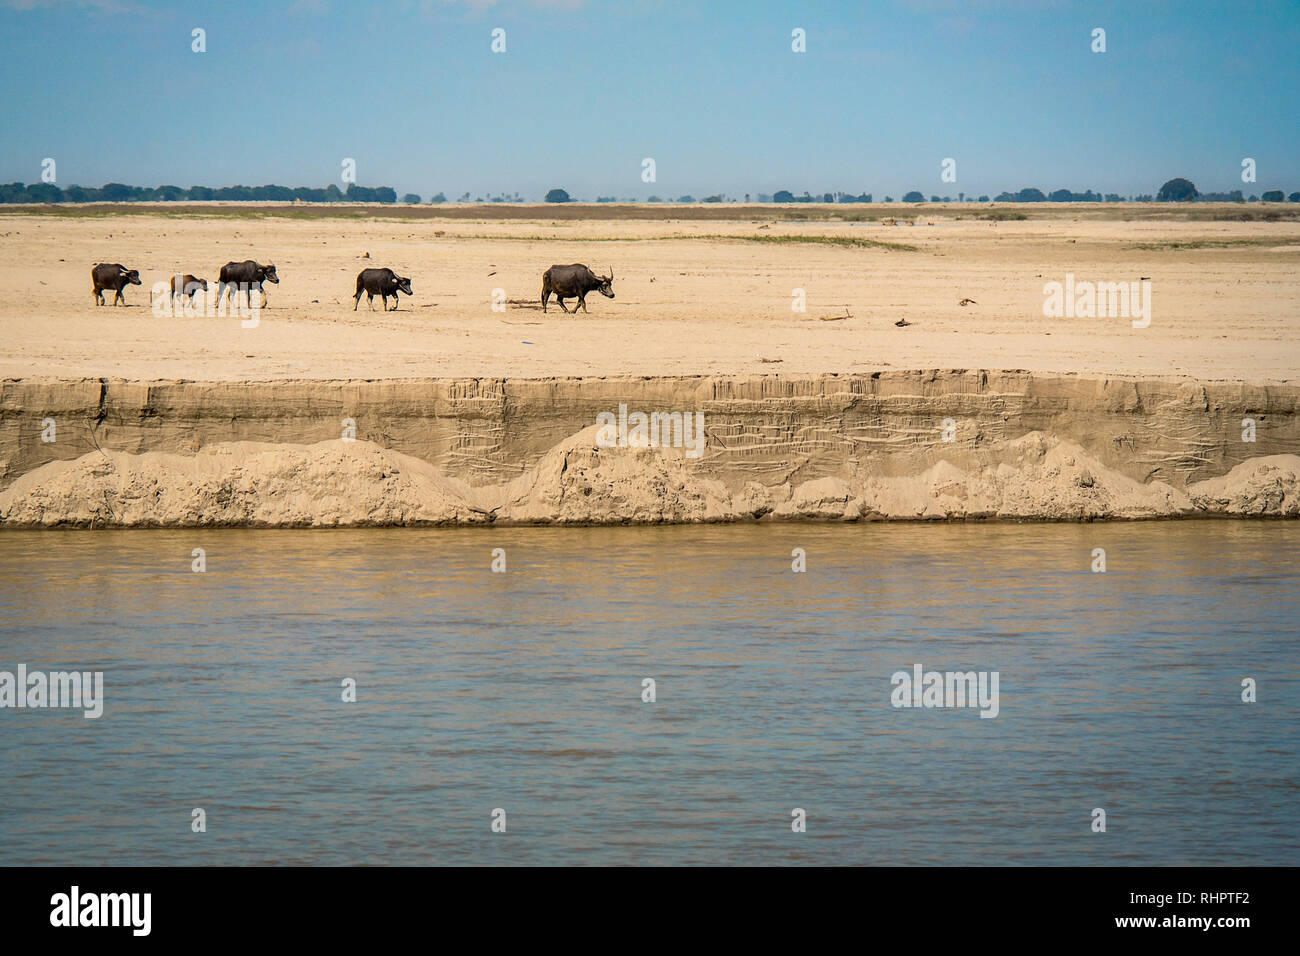 A heard of water buffalo walk inline along a sand bank towards a river to water. Stock Photo